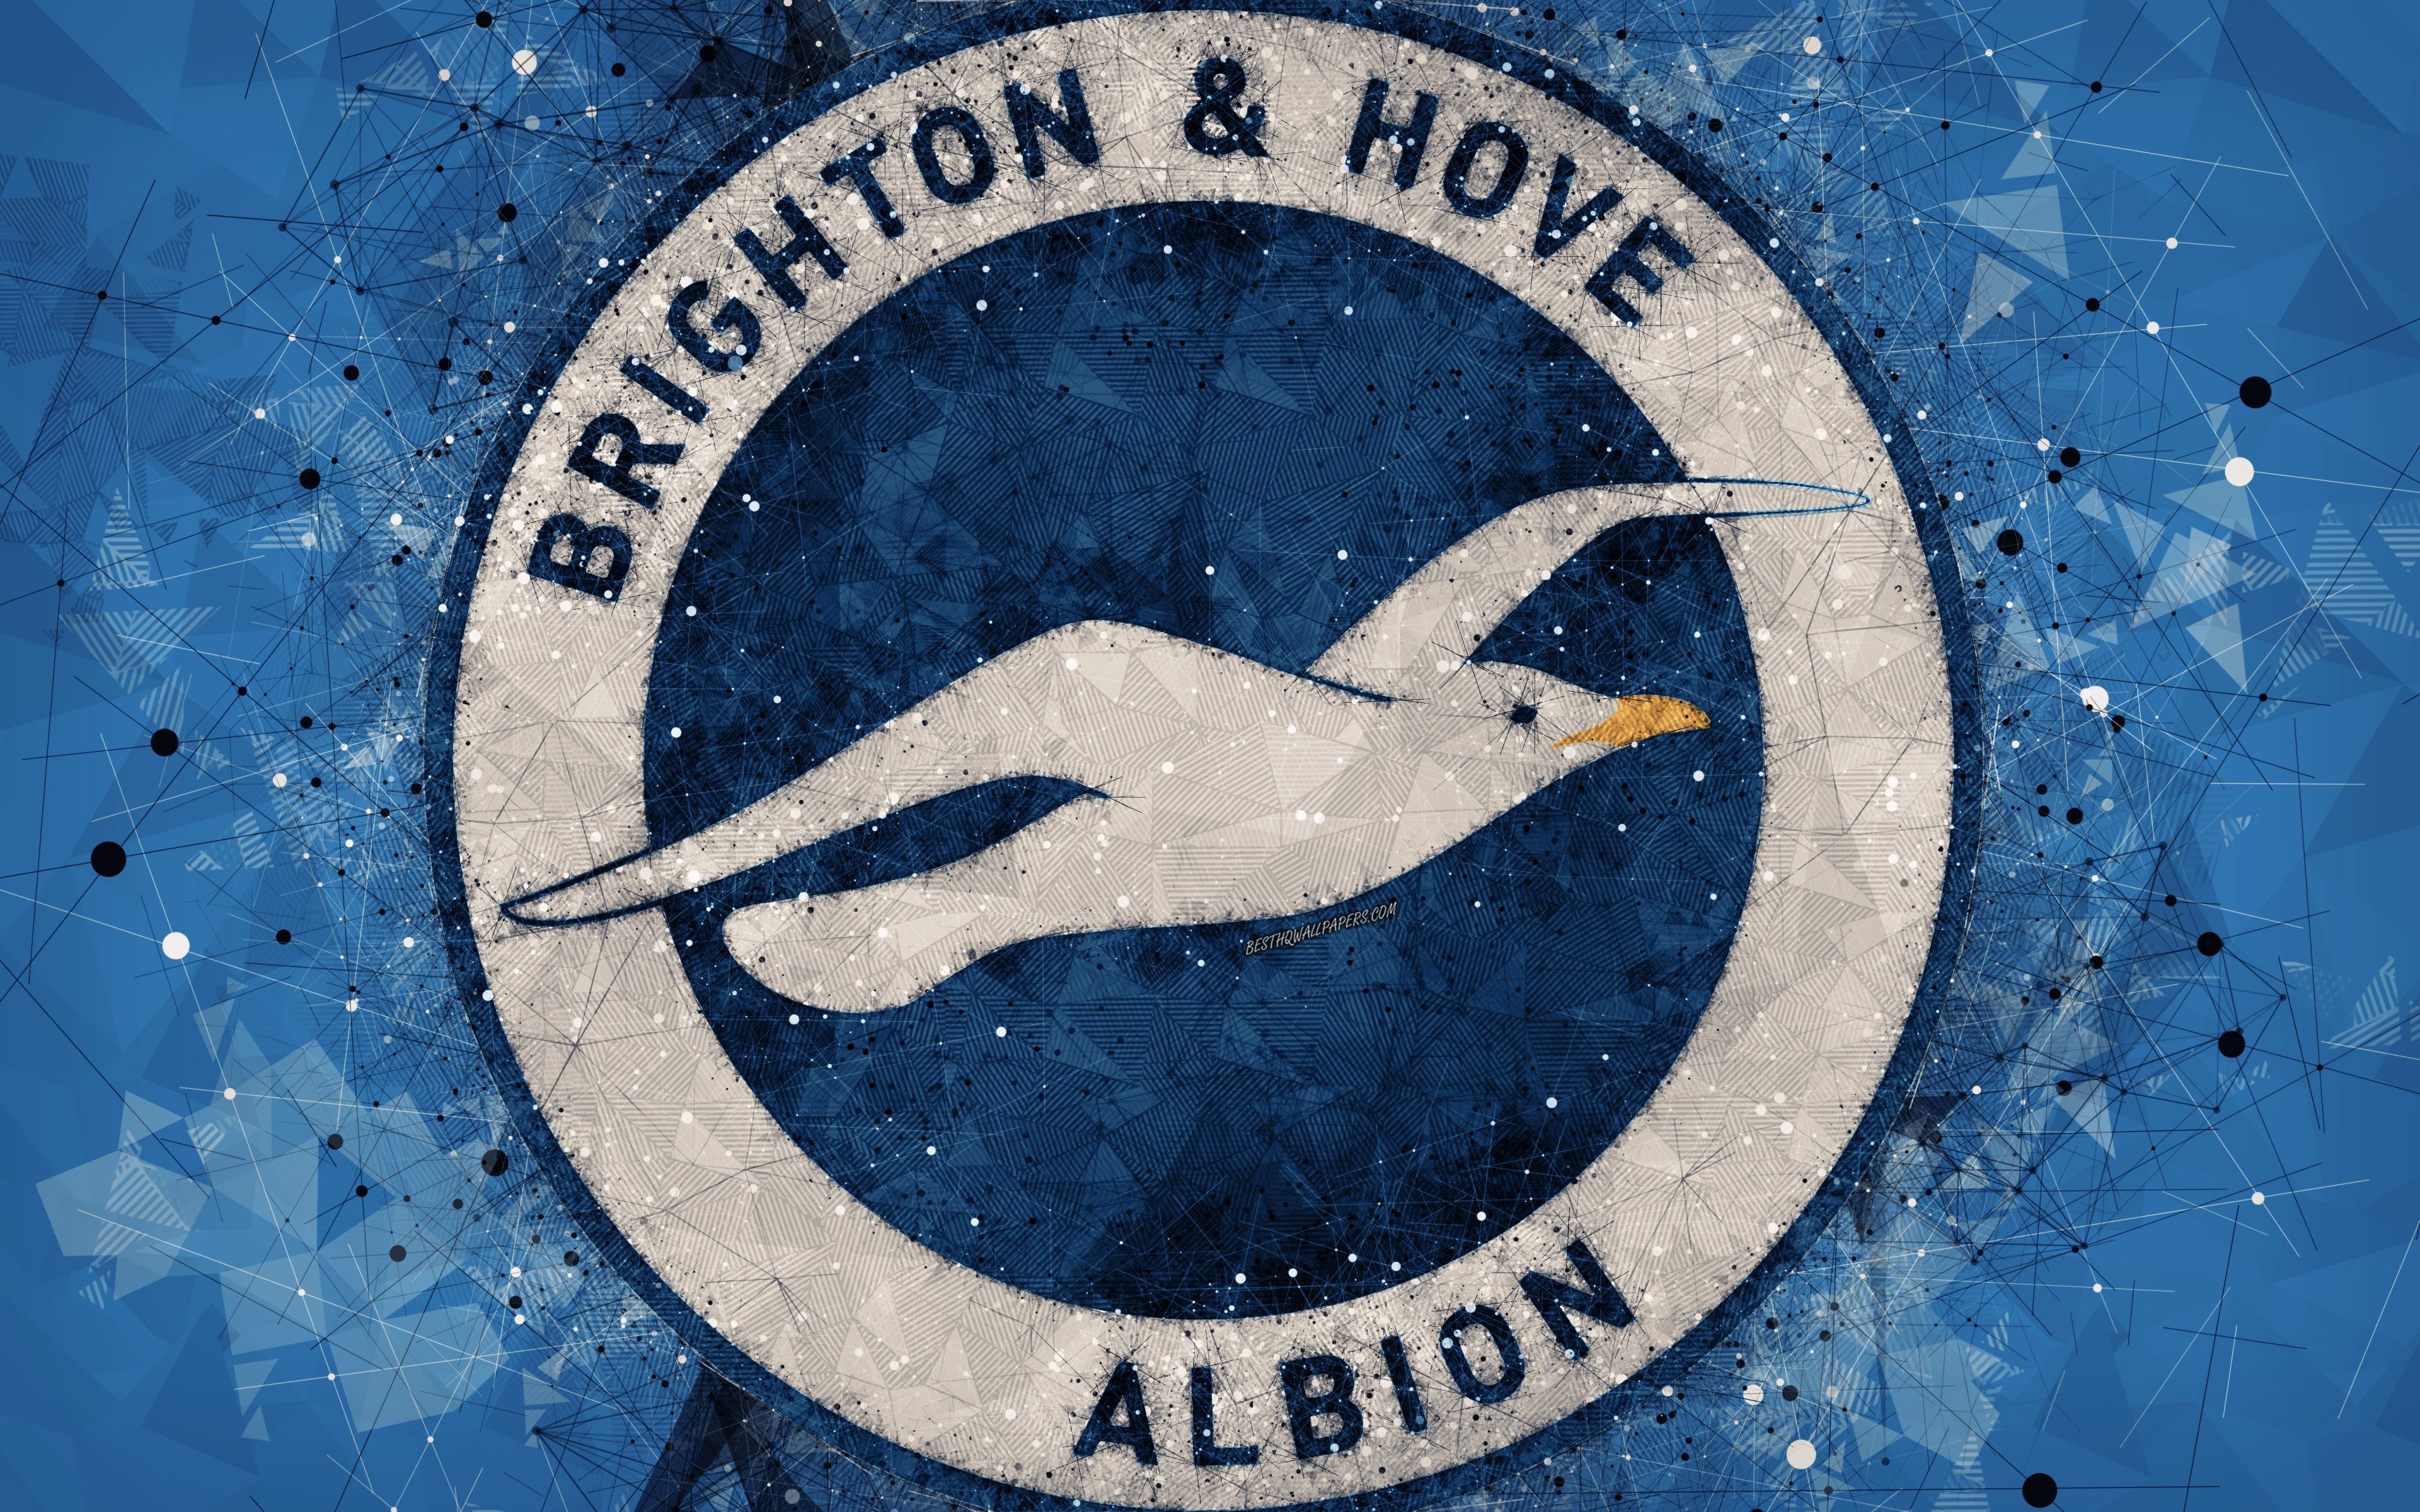 Download wallpaper Brighton and Hove Albion FC, 4k, logo, geometric